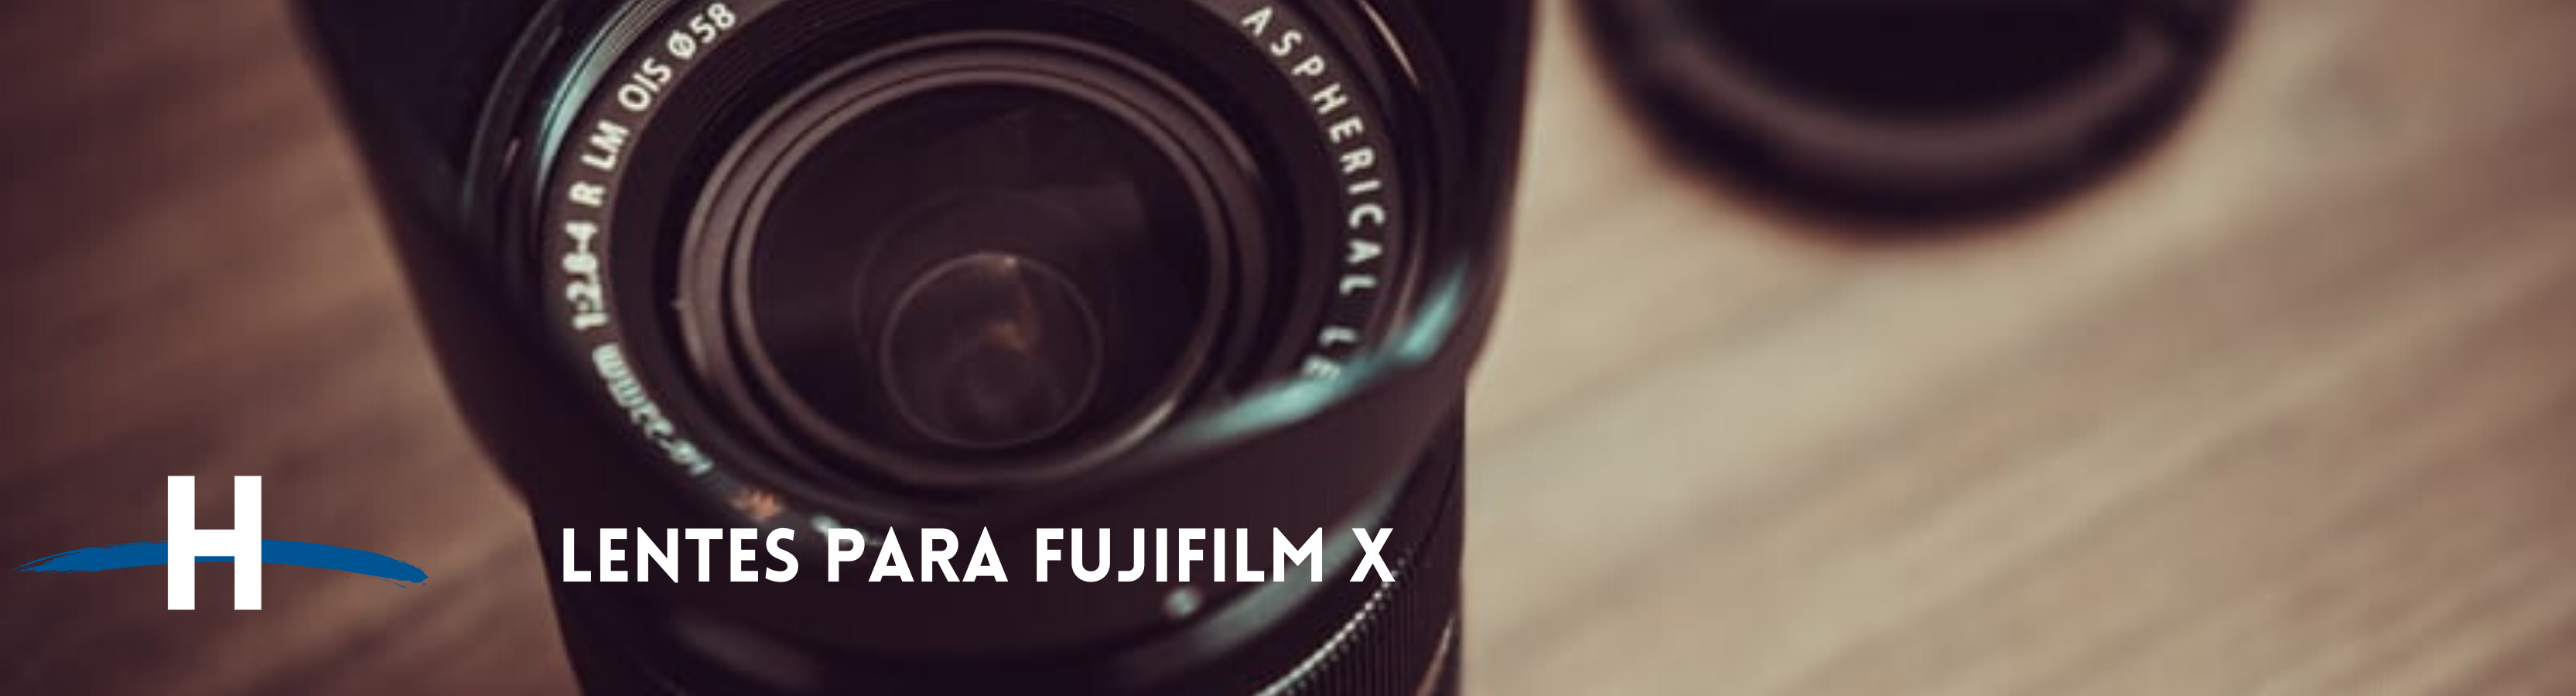 Lentes Fujifilm X